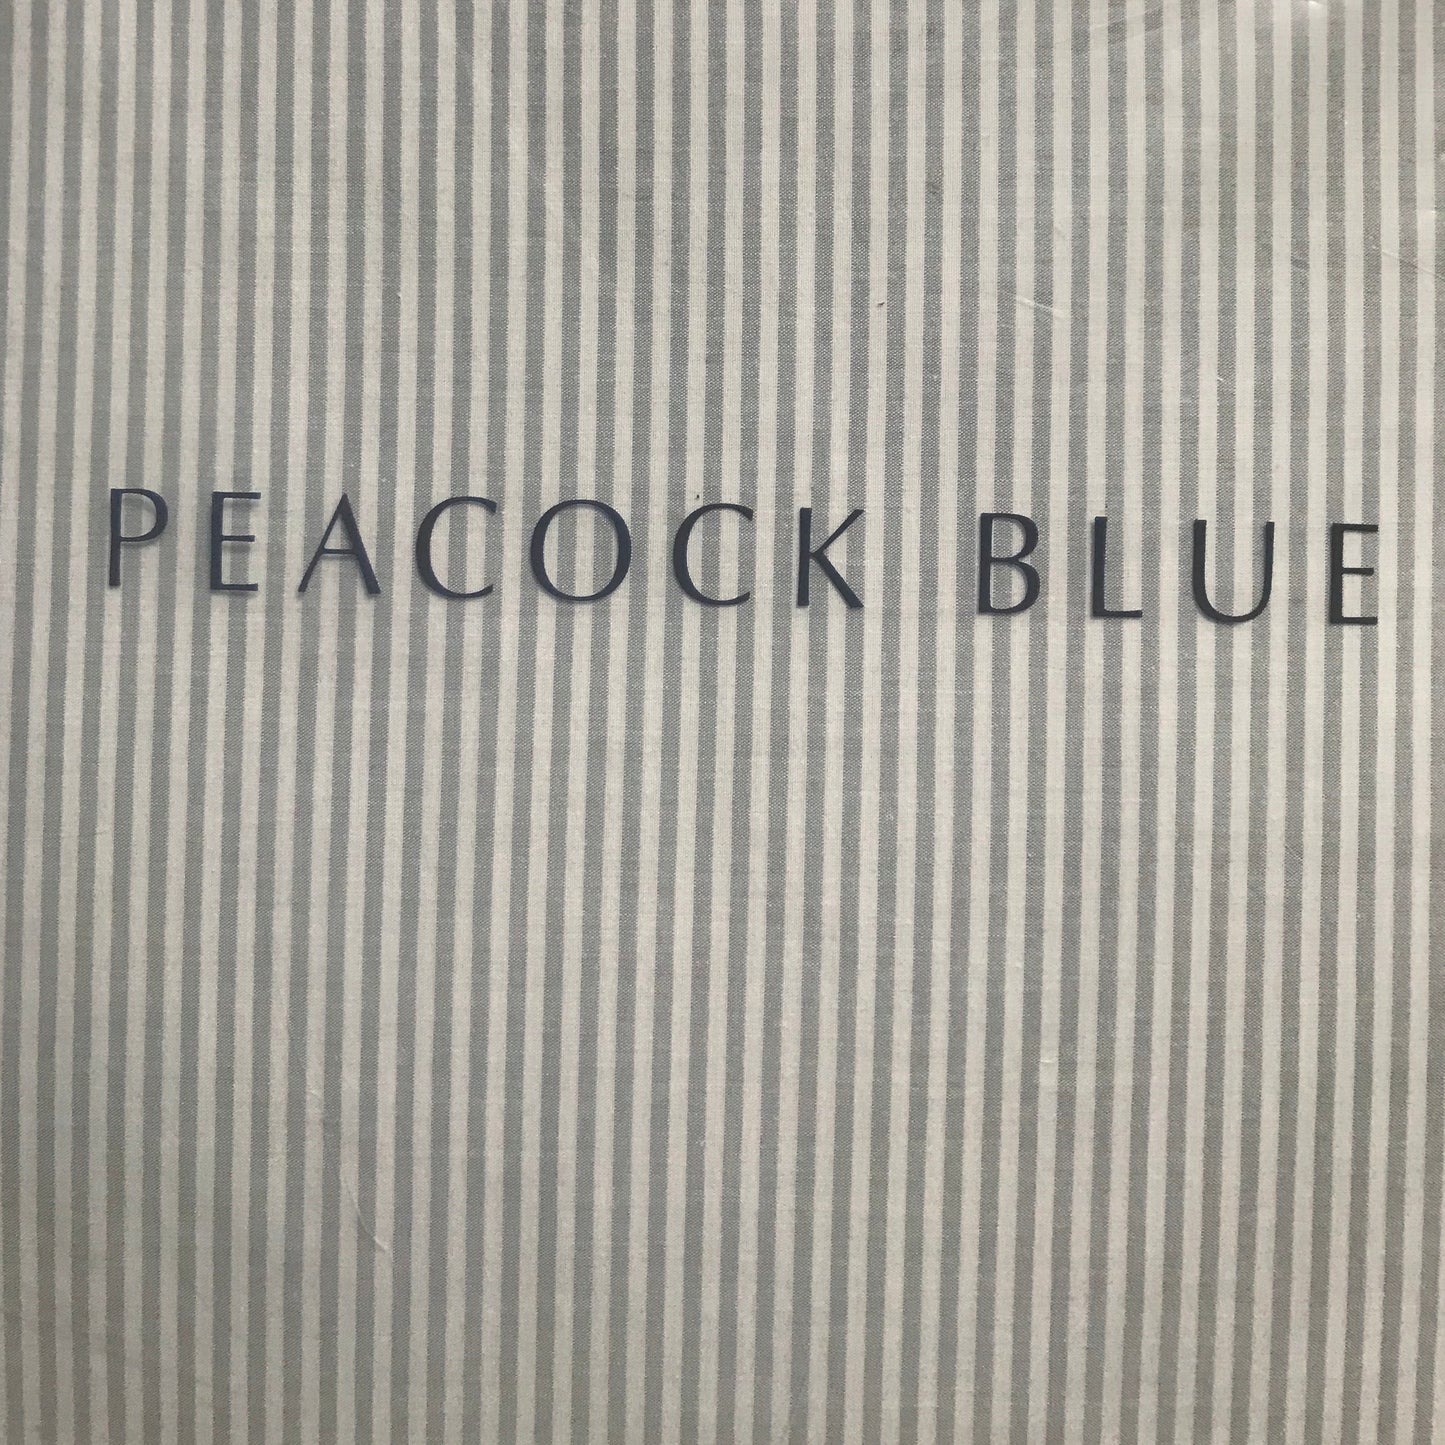 Vermont Stripe Duvet Set by Peacock Blue